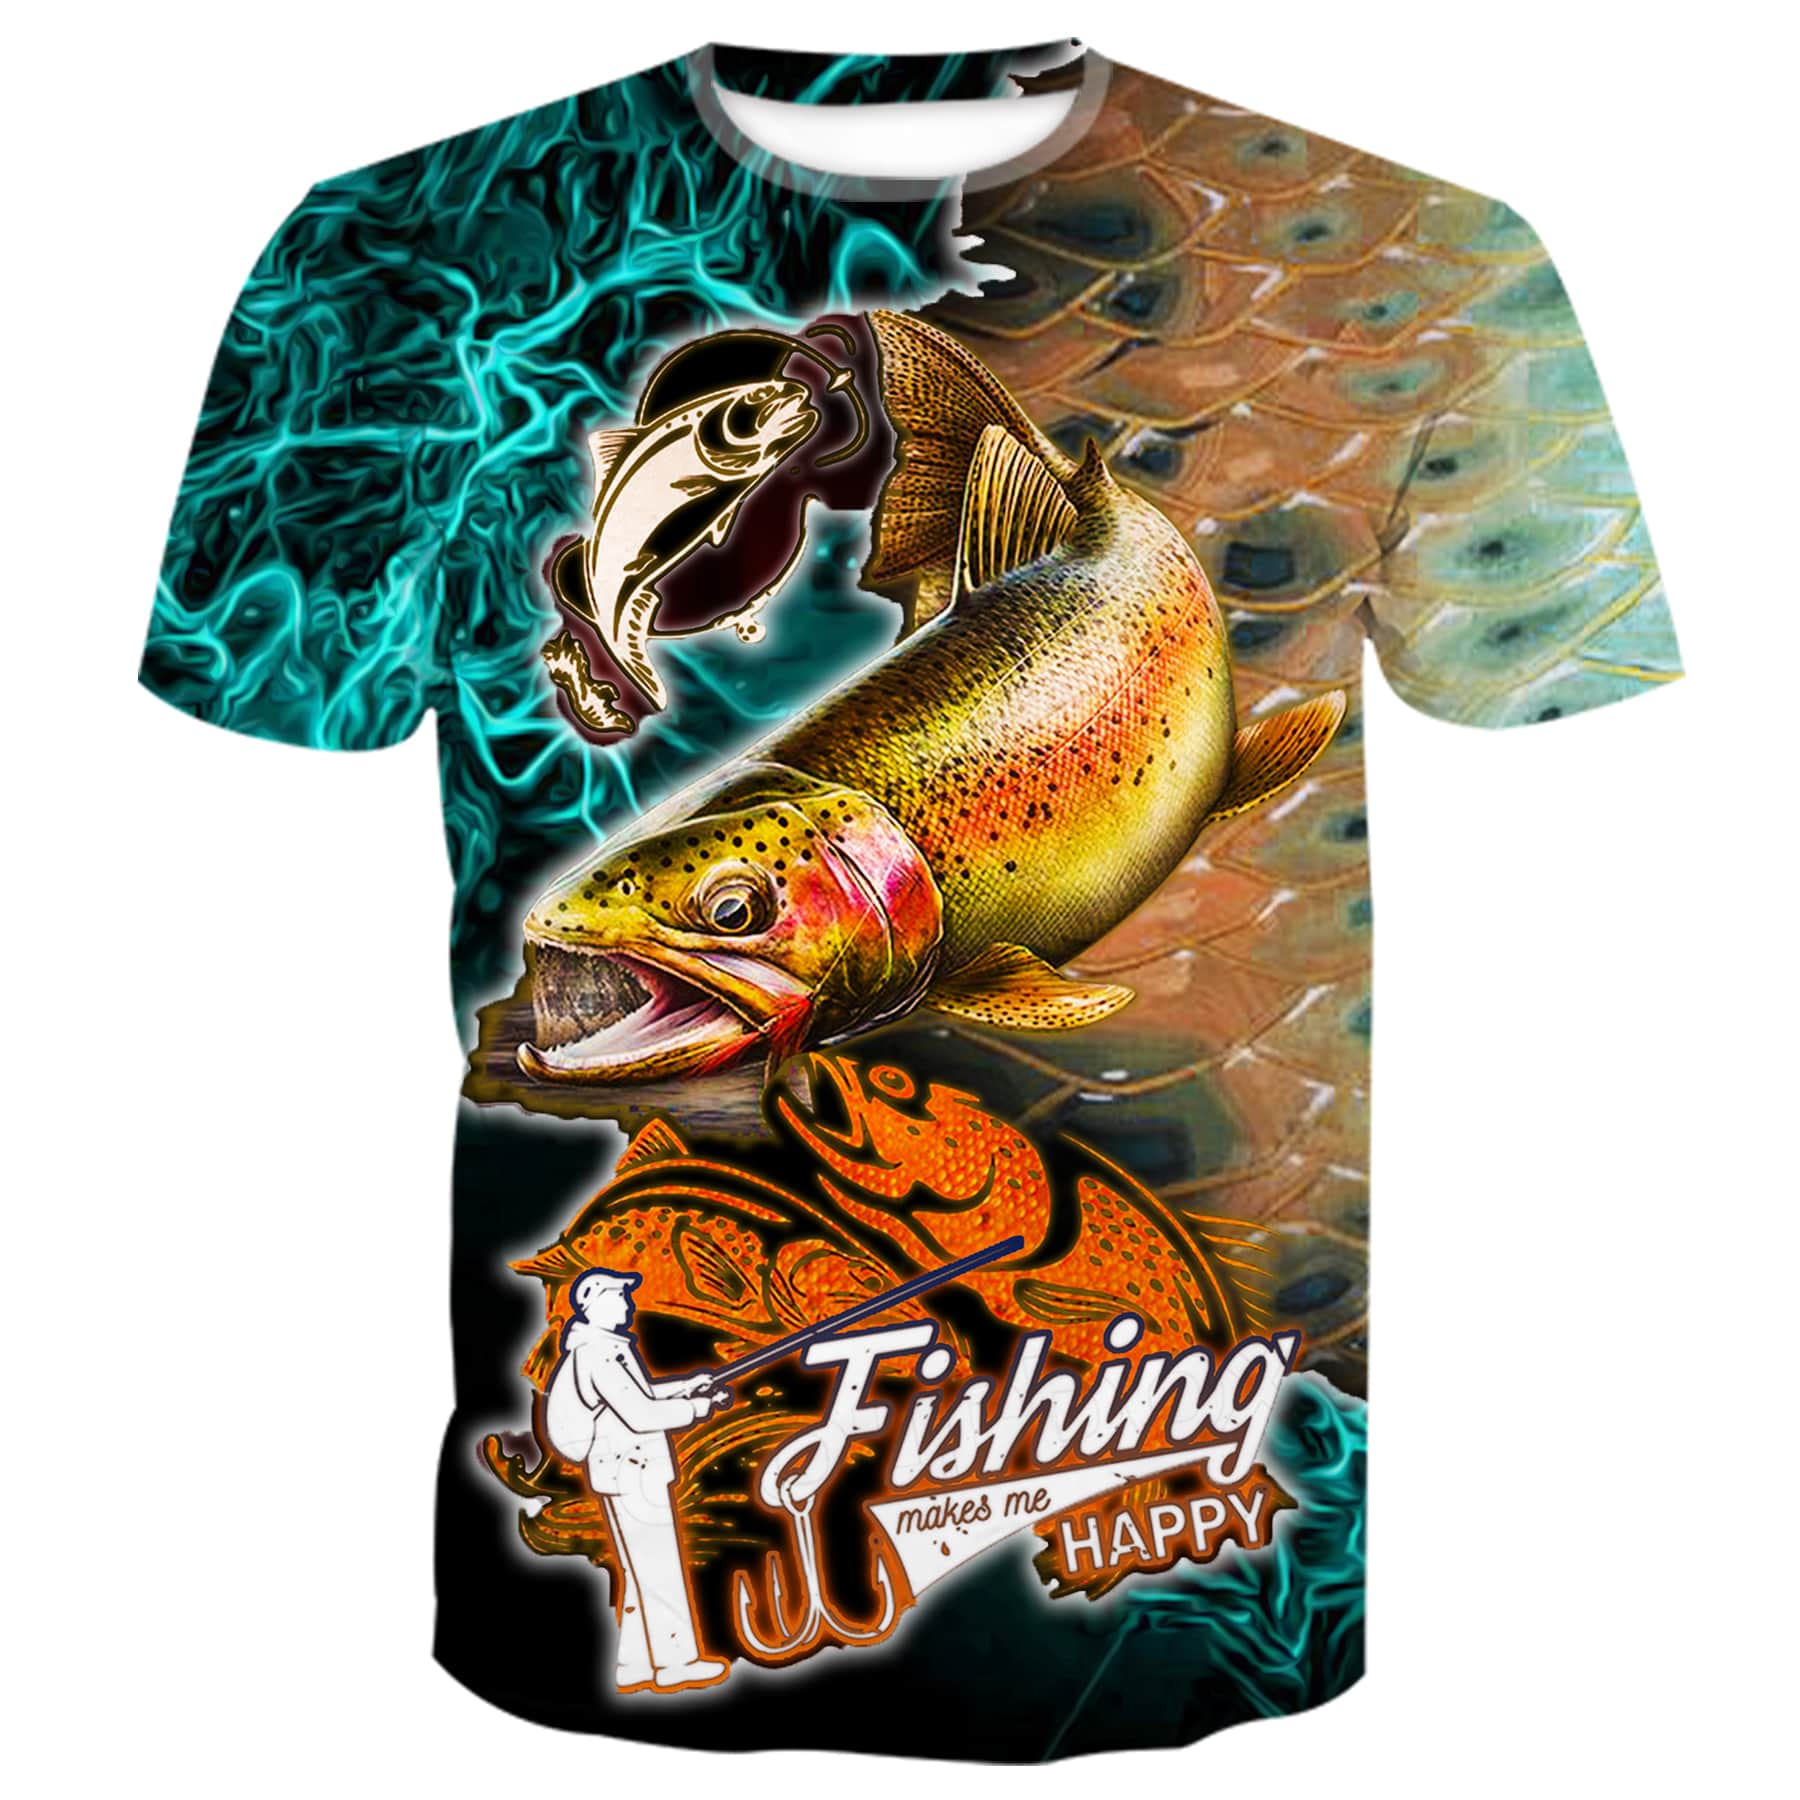 Fishing makes me happy - T-Shirt - elitefishingoutlet